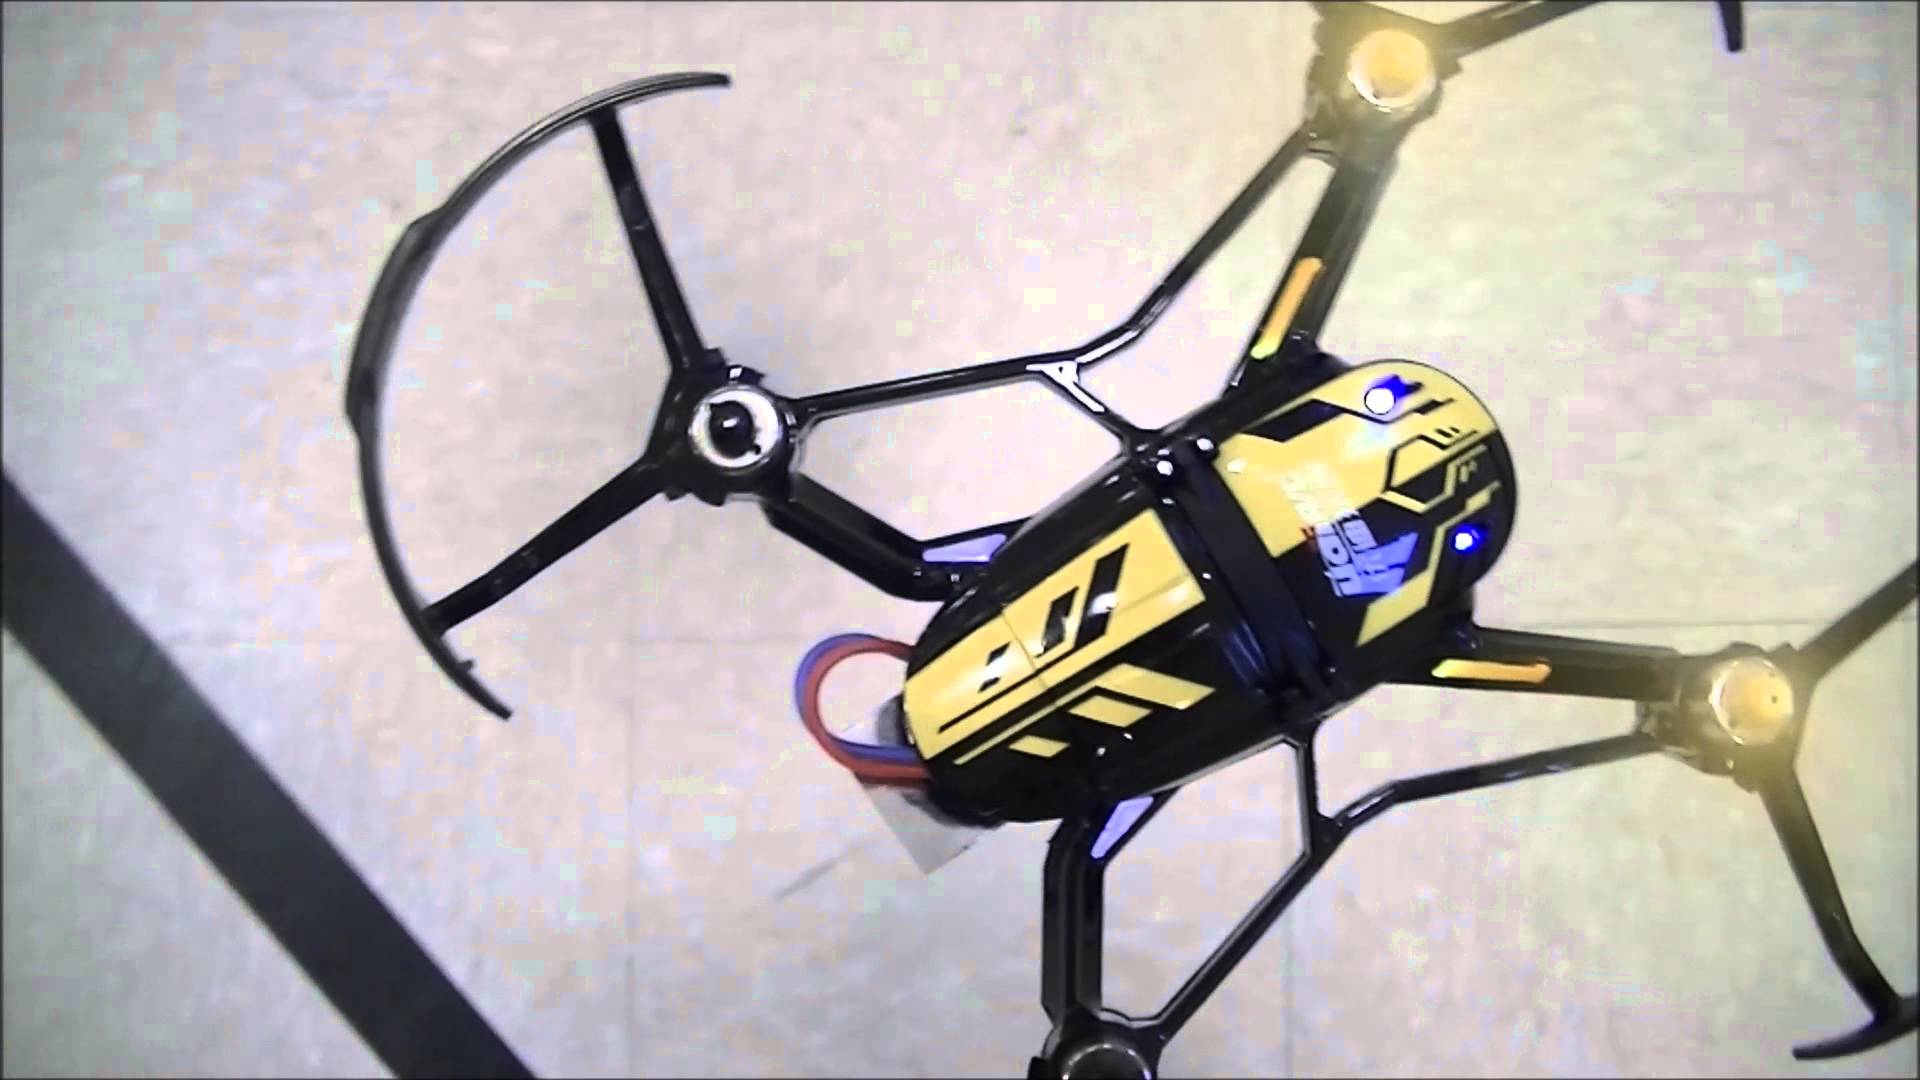 UDI U927 3D Quadcopter Drone First Test Flight Inverted Flight